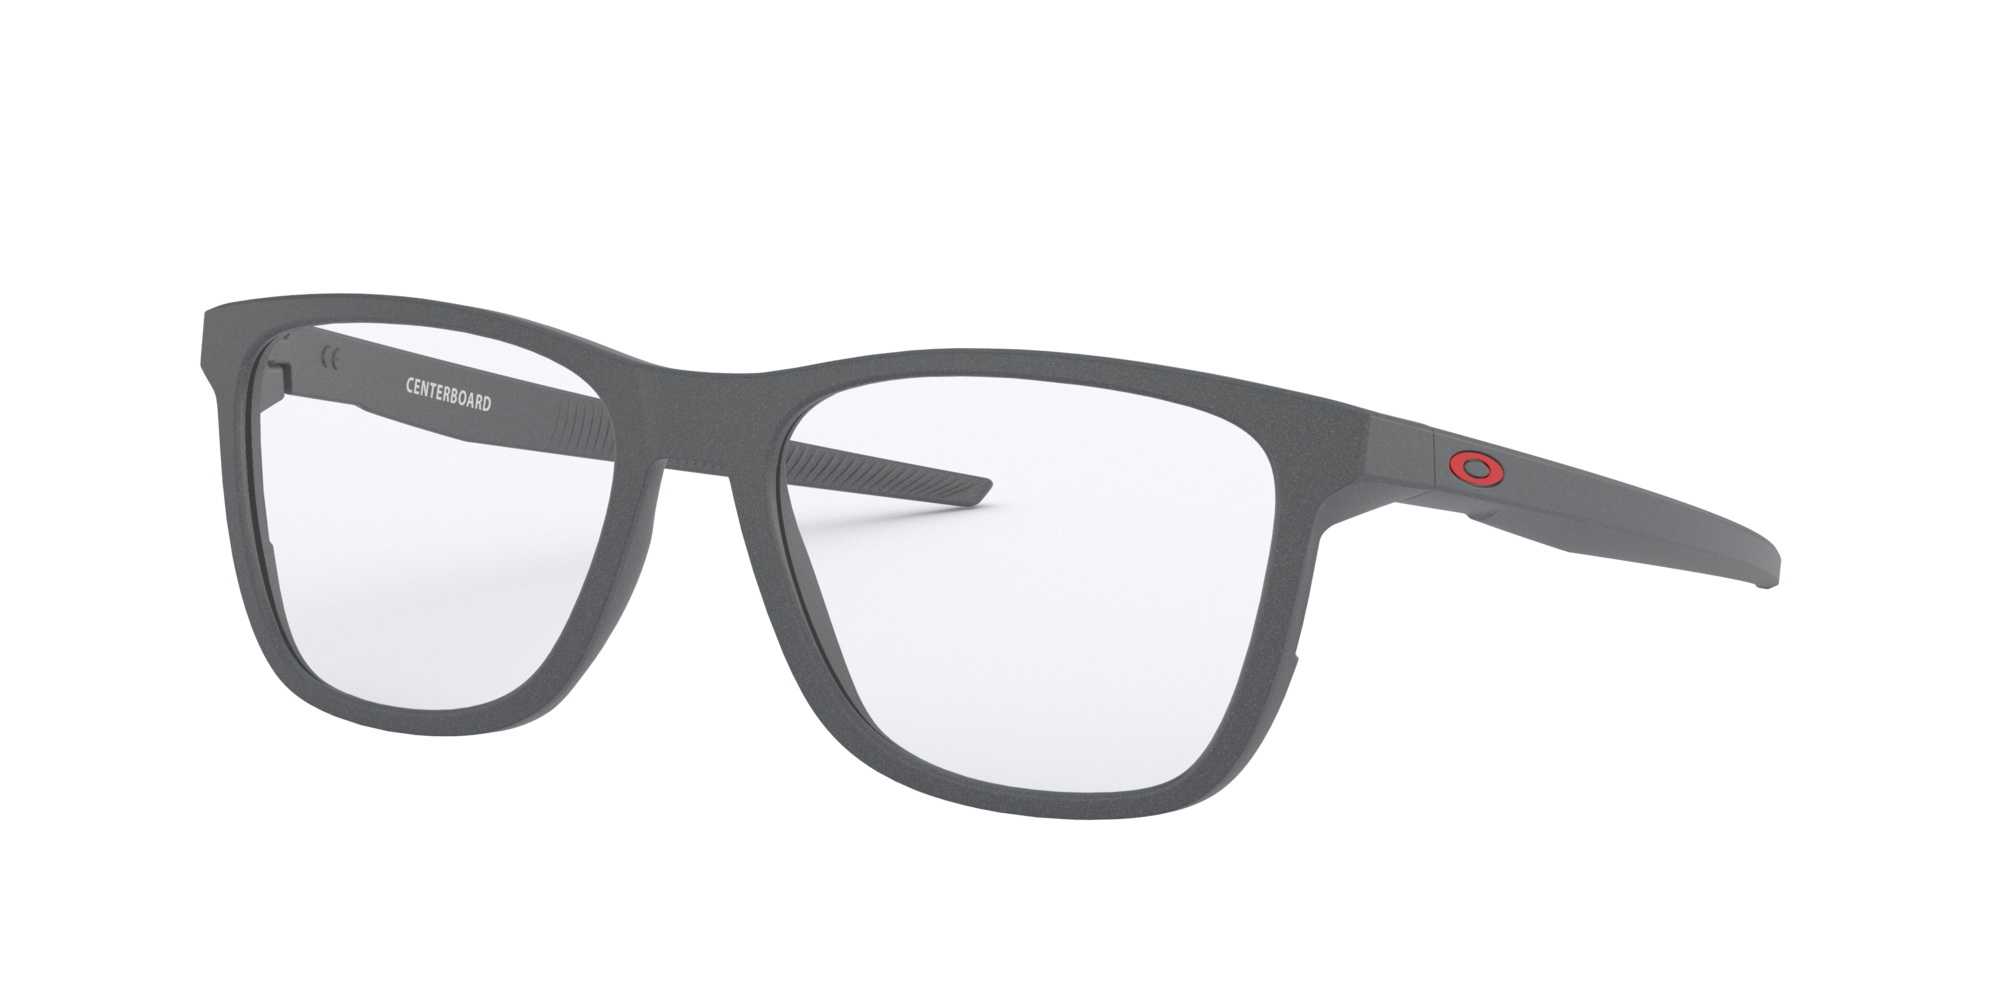 Eyeglasses OAKLEY OX 8163 816304 CENTERBOARDHOUSE 55/17 Man Acier clair  square frames Full Frame Glasses trendy 55mmx17mm 114$CA